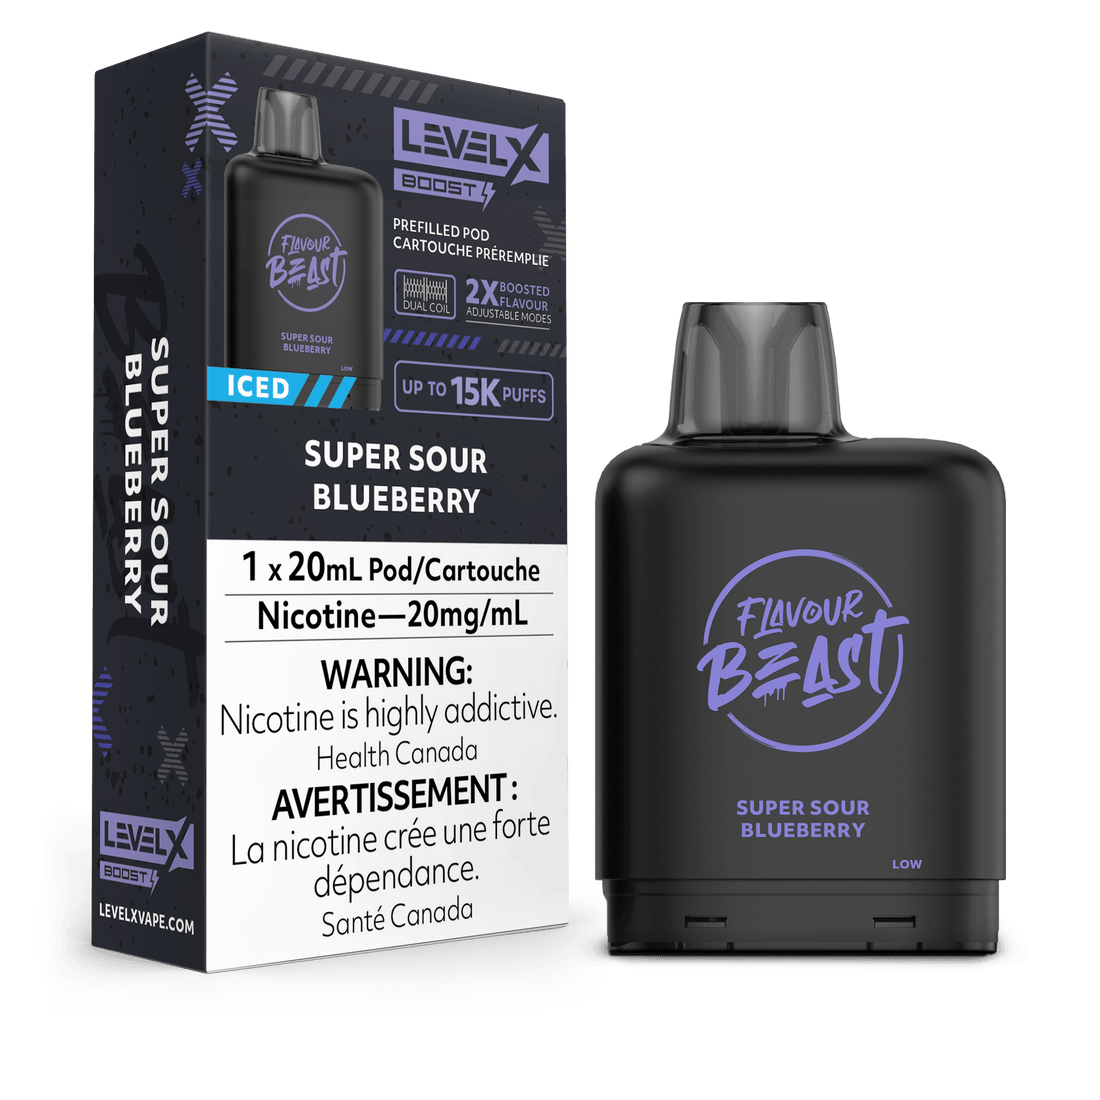 Level X Boost - Super Sour Blueberry Iced - Vapor Shoppe